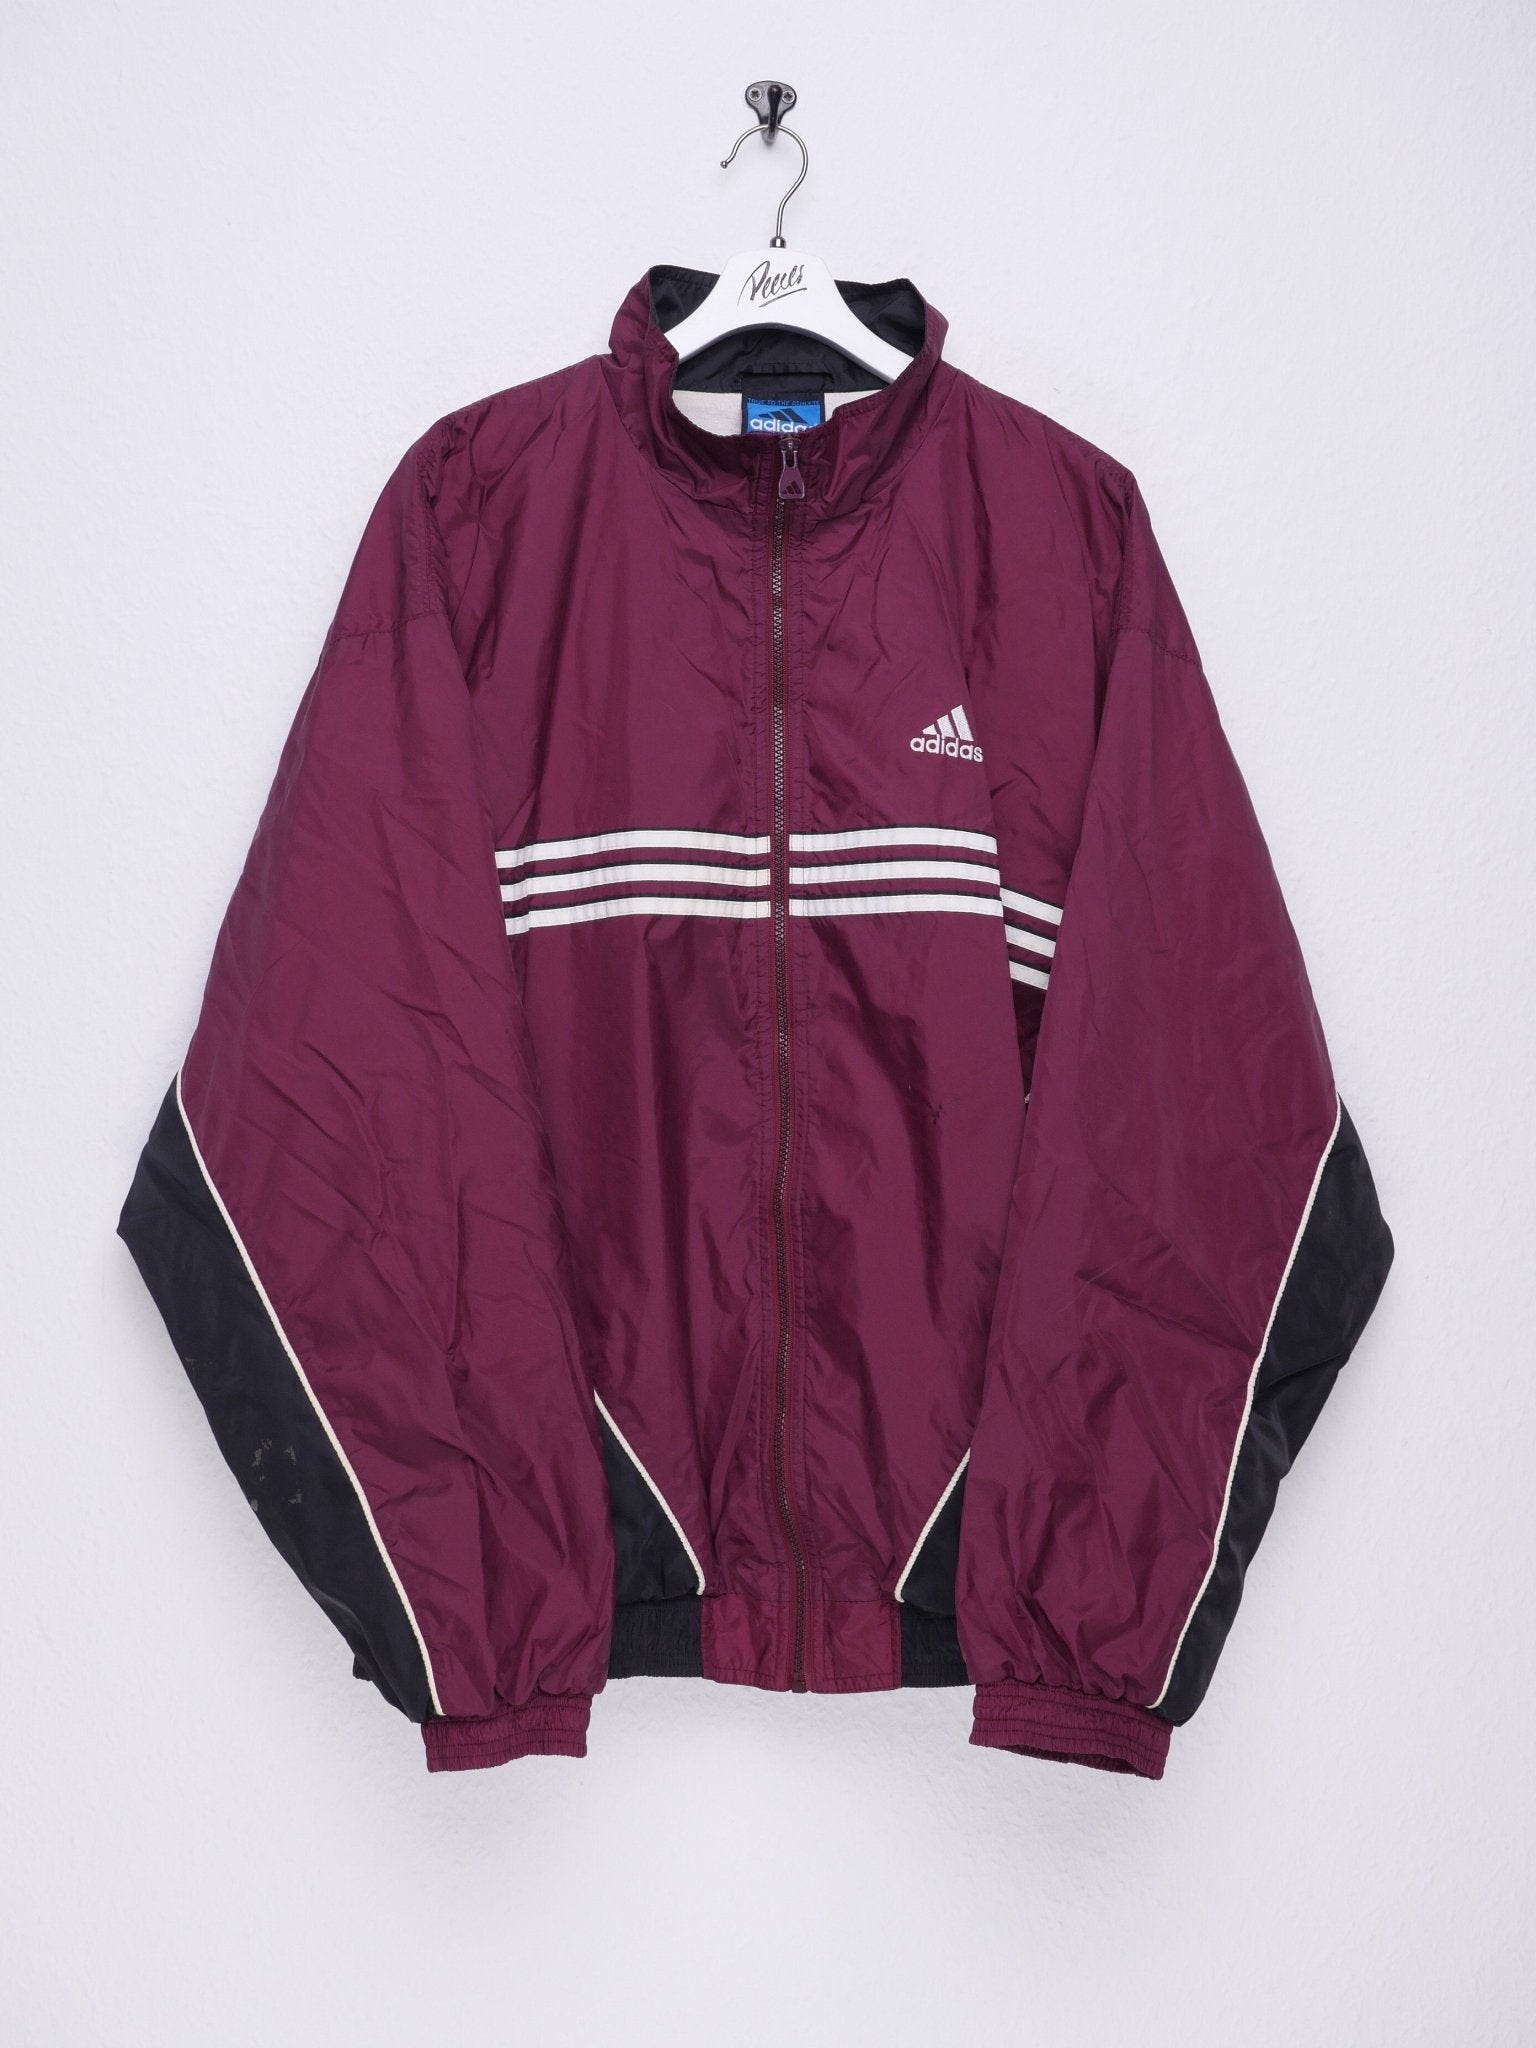 adidas embroidered Logo & Stripes burgundy Track Jacket - Peeces